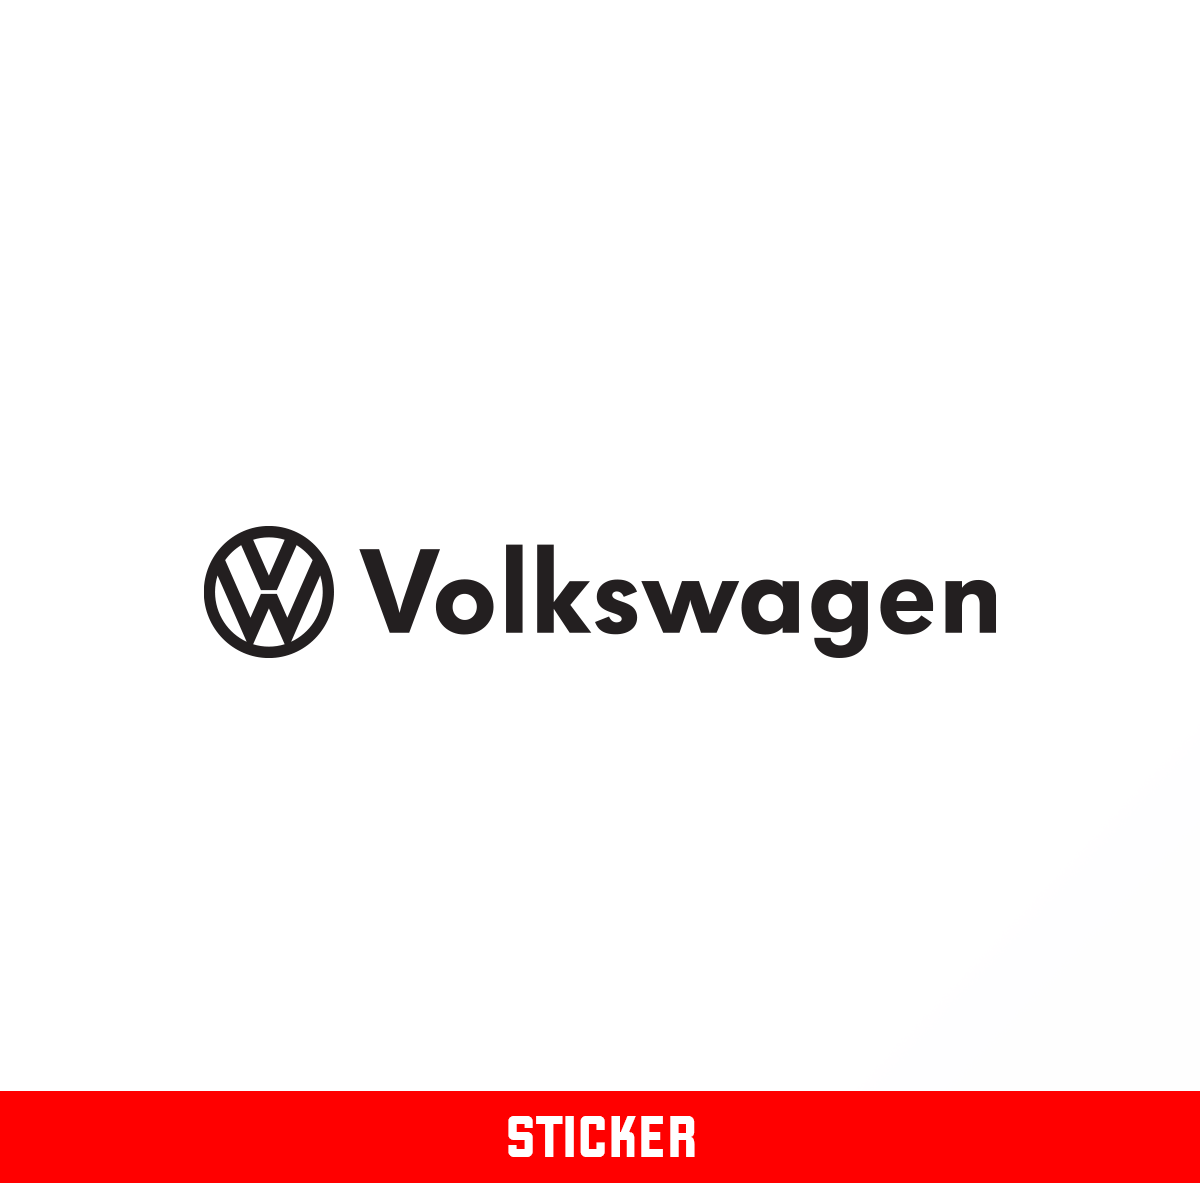 https://dopegfx.co.uk/wp-content/uploads/2020/04/Volkswagen-Sticker.png